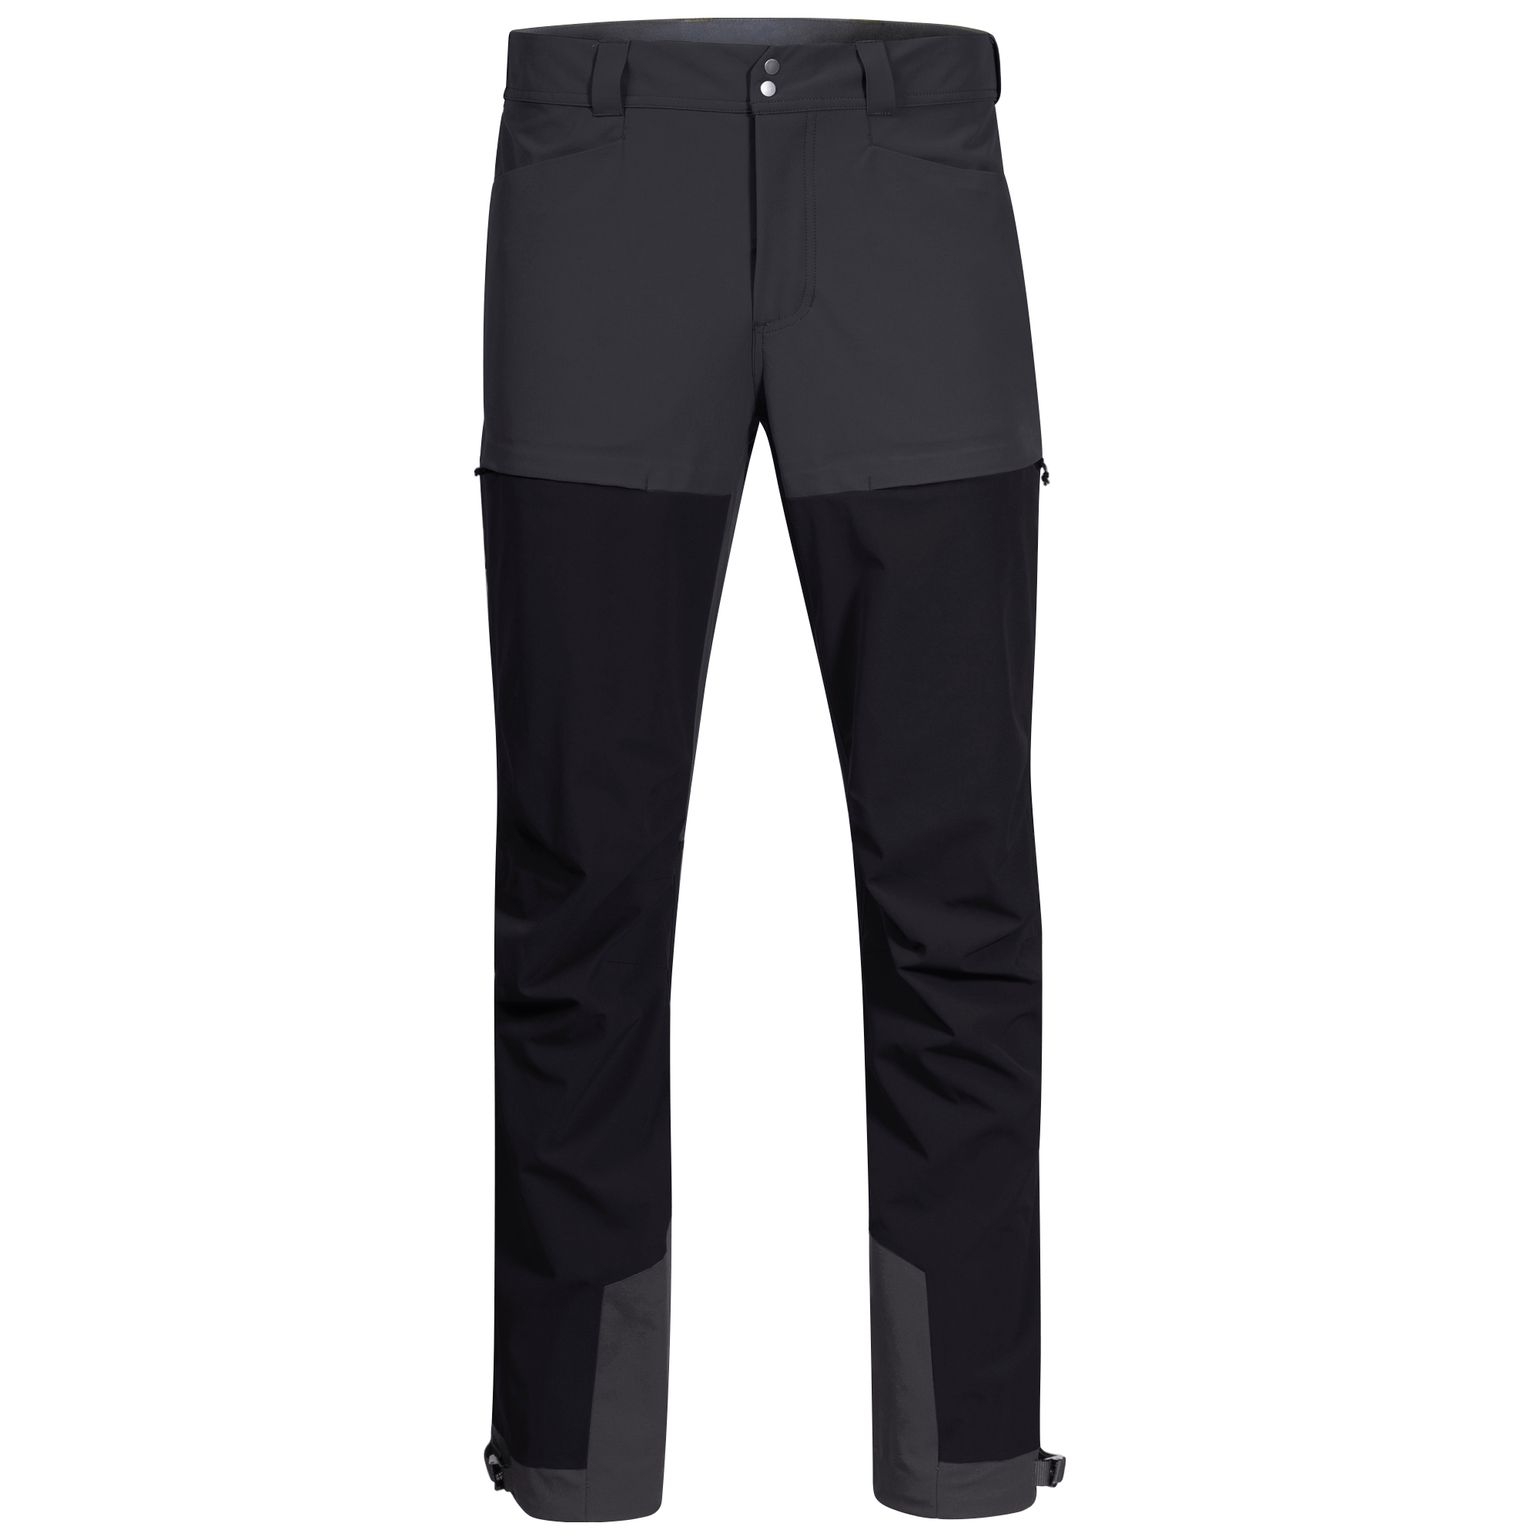 Bergans Men's Bekkely Hybrid Pant Black/Solid Charcoal